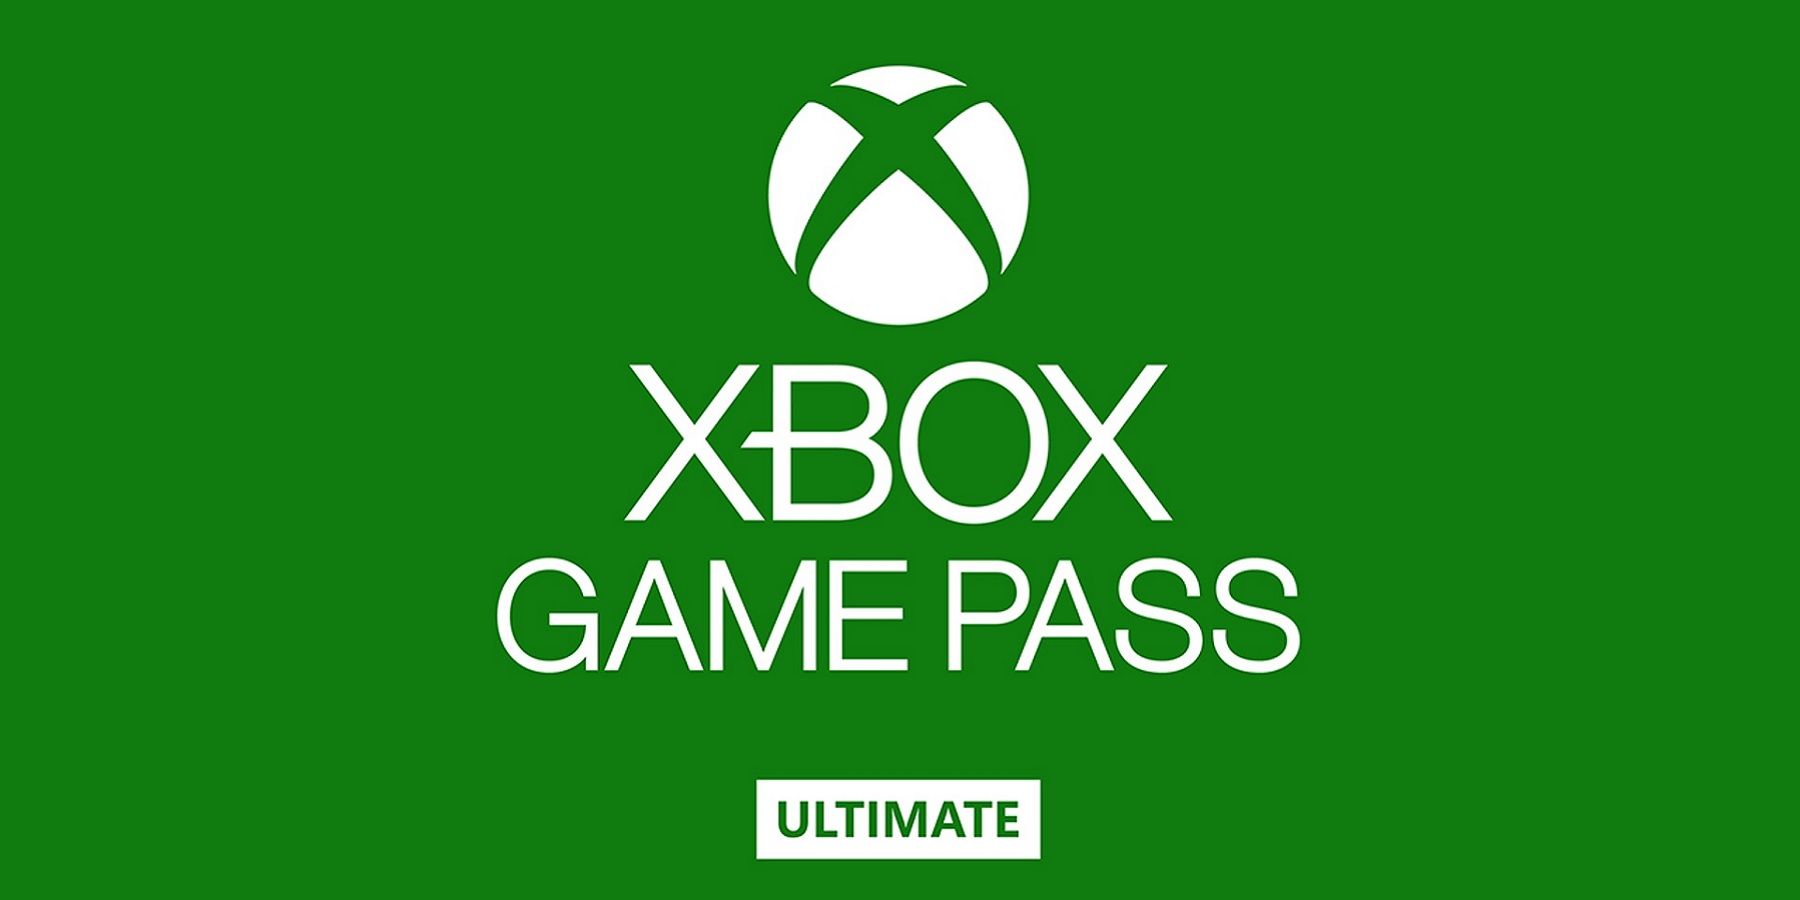 Xbox Game Pass Ultimateは2つの新しいゲームを追加します